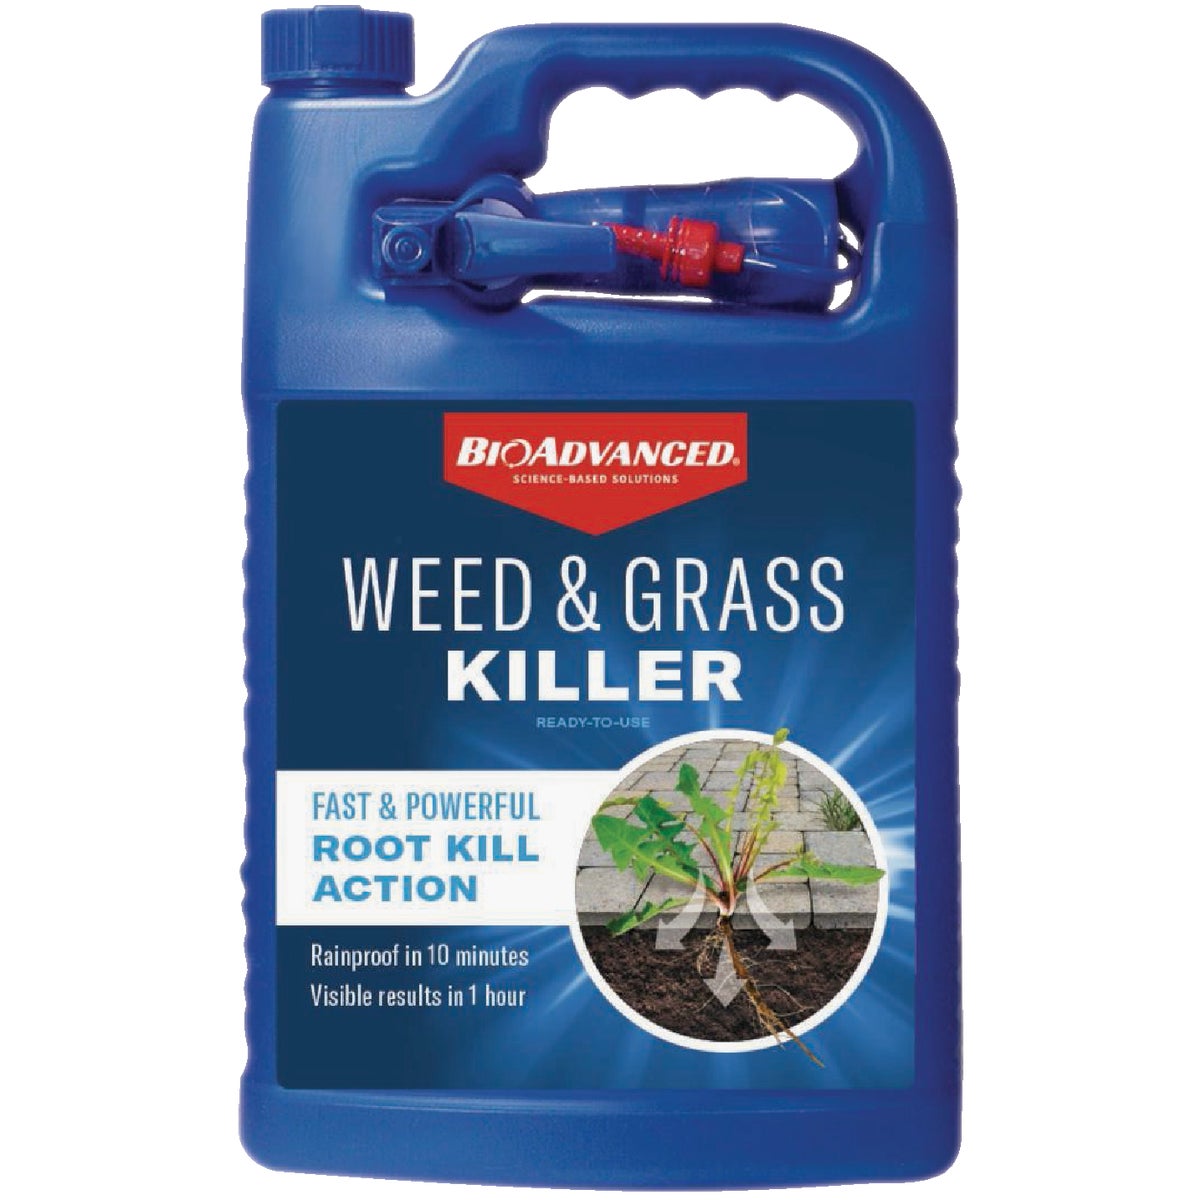 BioAdvanced 1 Gal. Ready To Use Trigger Spray Weed & Grass Killer